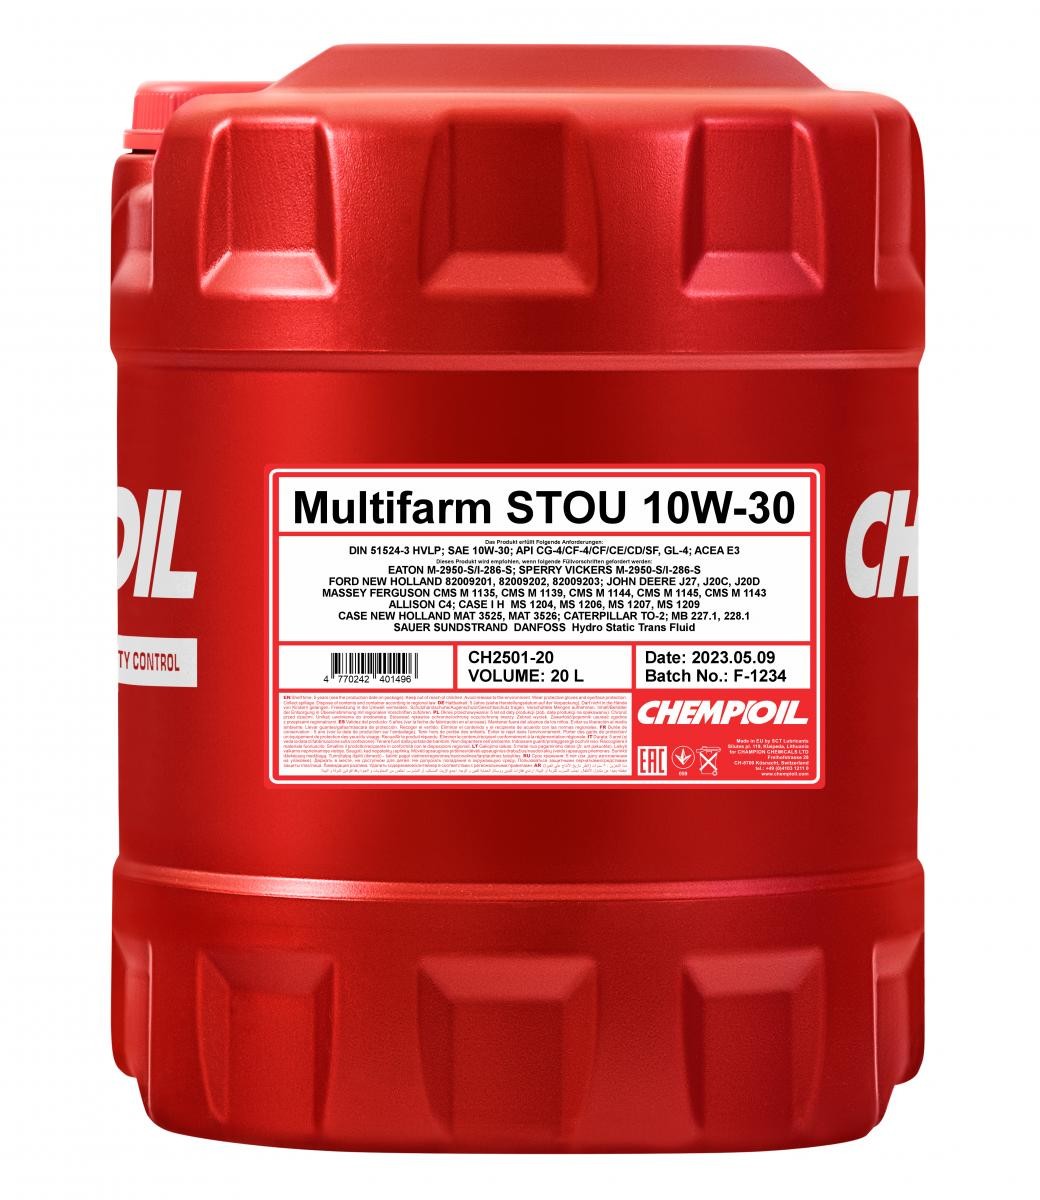 Motoröl API GL-4 CHEMPIOIL günstig - CH2501-20 Multifarm, Multifarm STOU, STOU